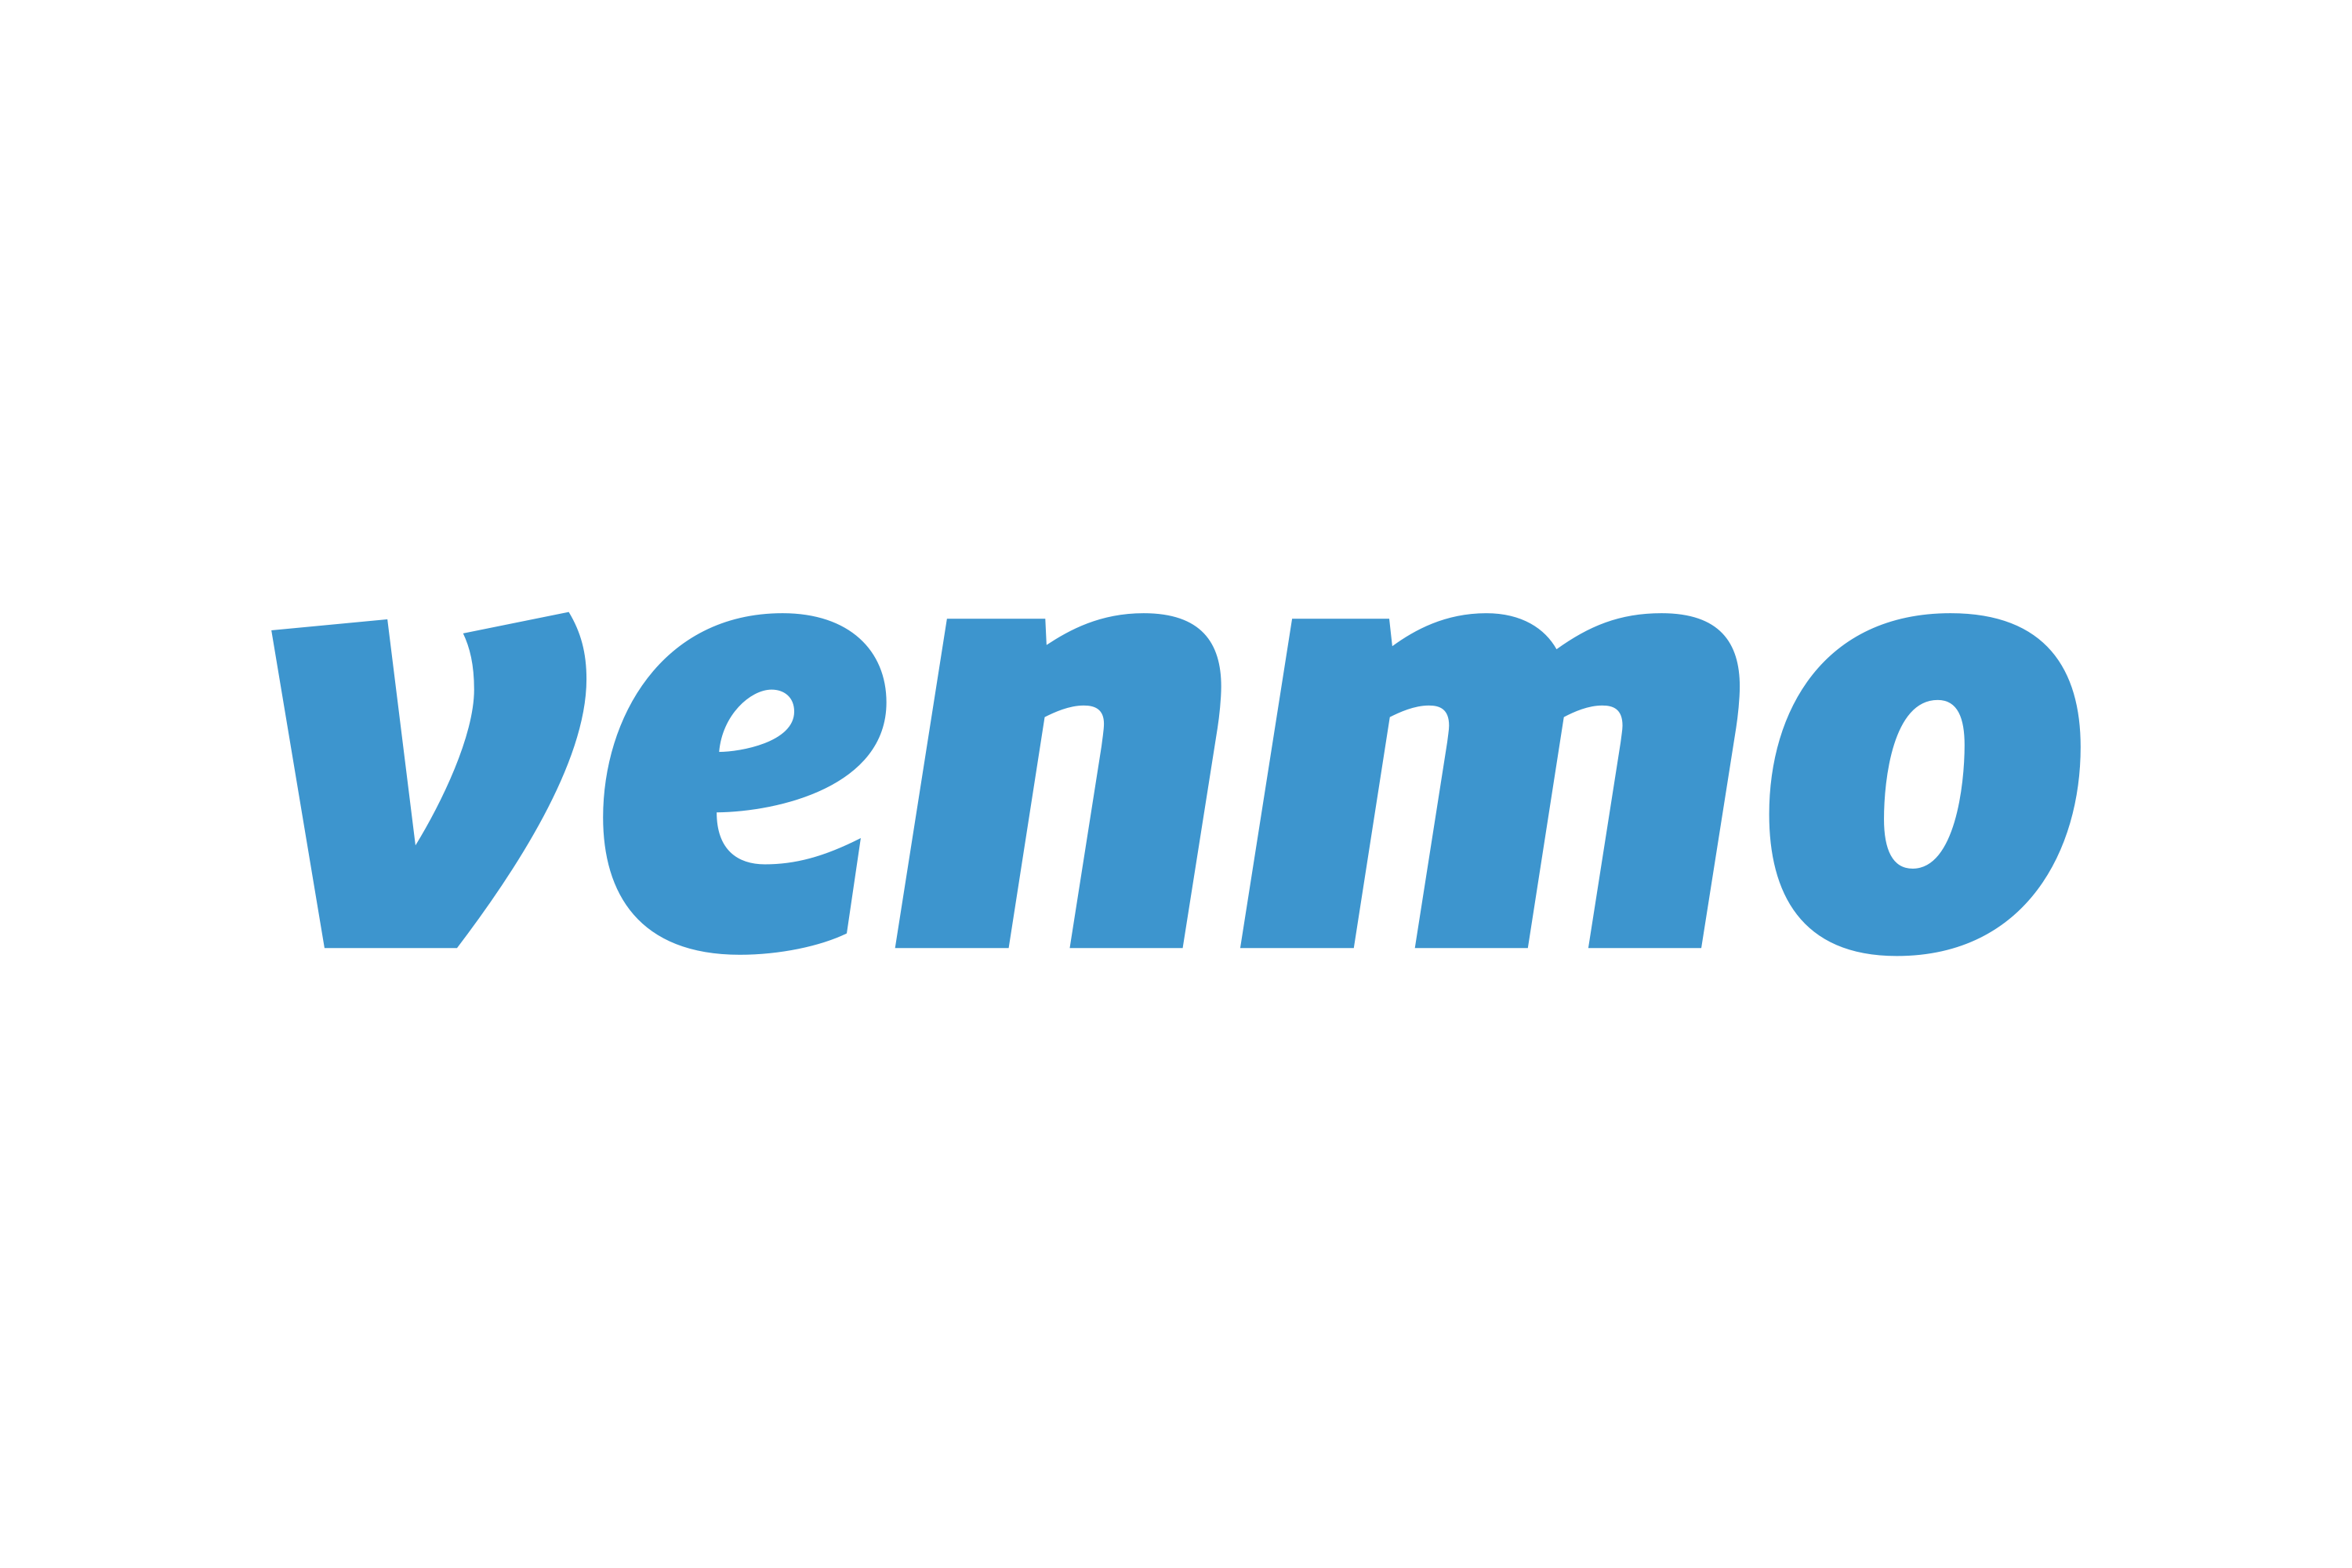 Download Venmo Logo in SVG Vector or PNG File Format - Logo.wine